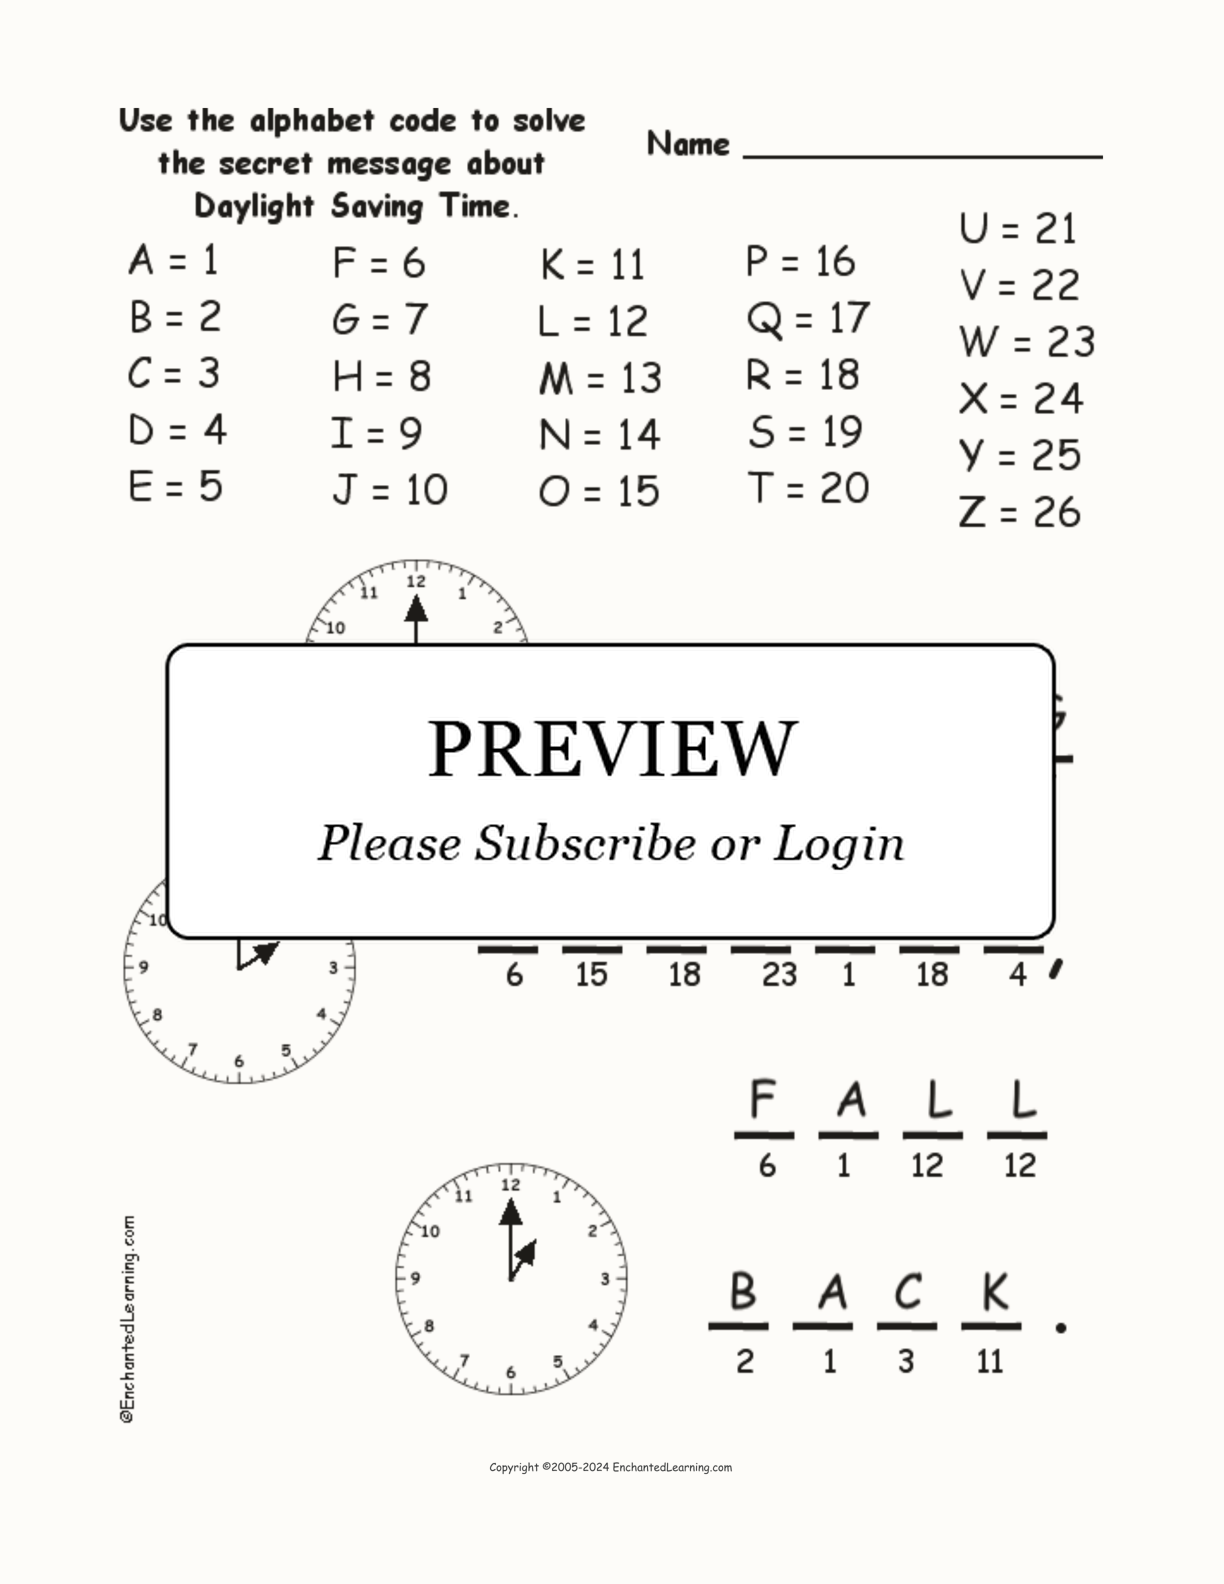 Daylight Saving Time Alphabet Code interactive worksheet page 2